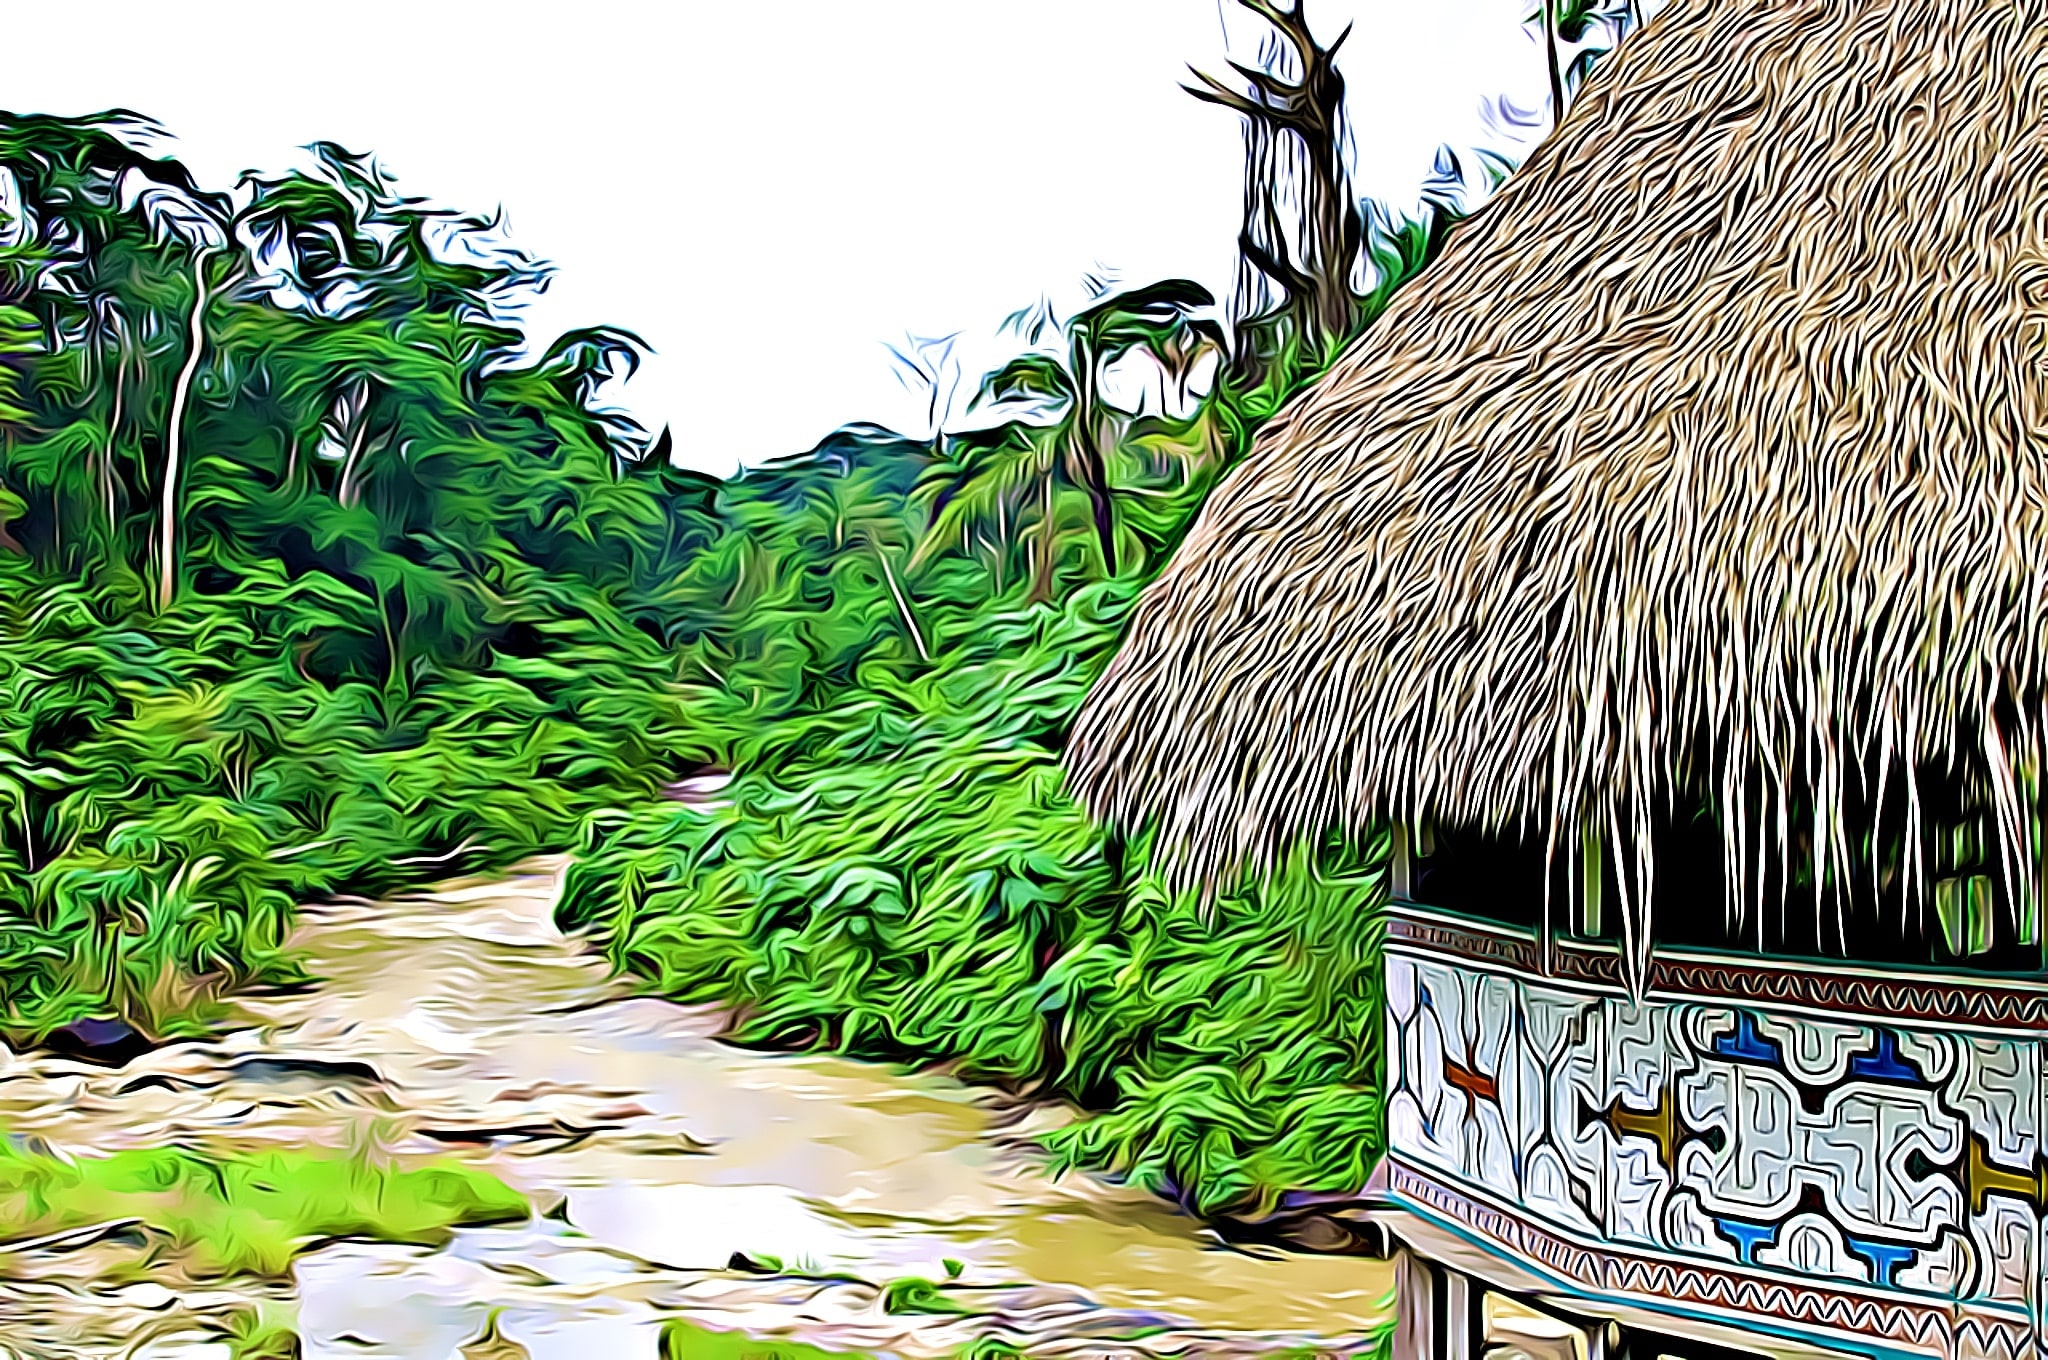 Mayantuyacu ayahuasca retreat center